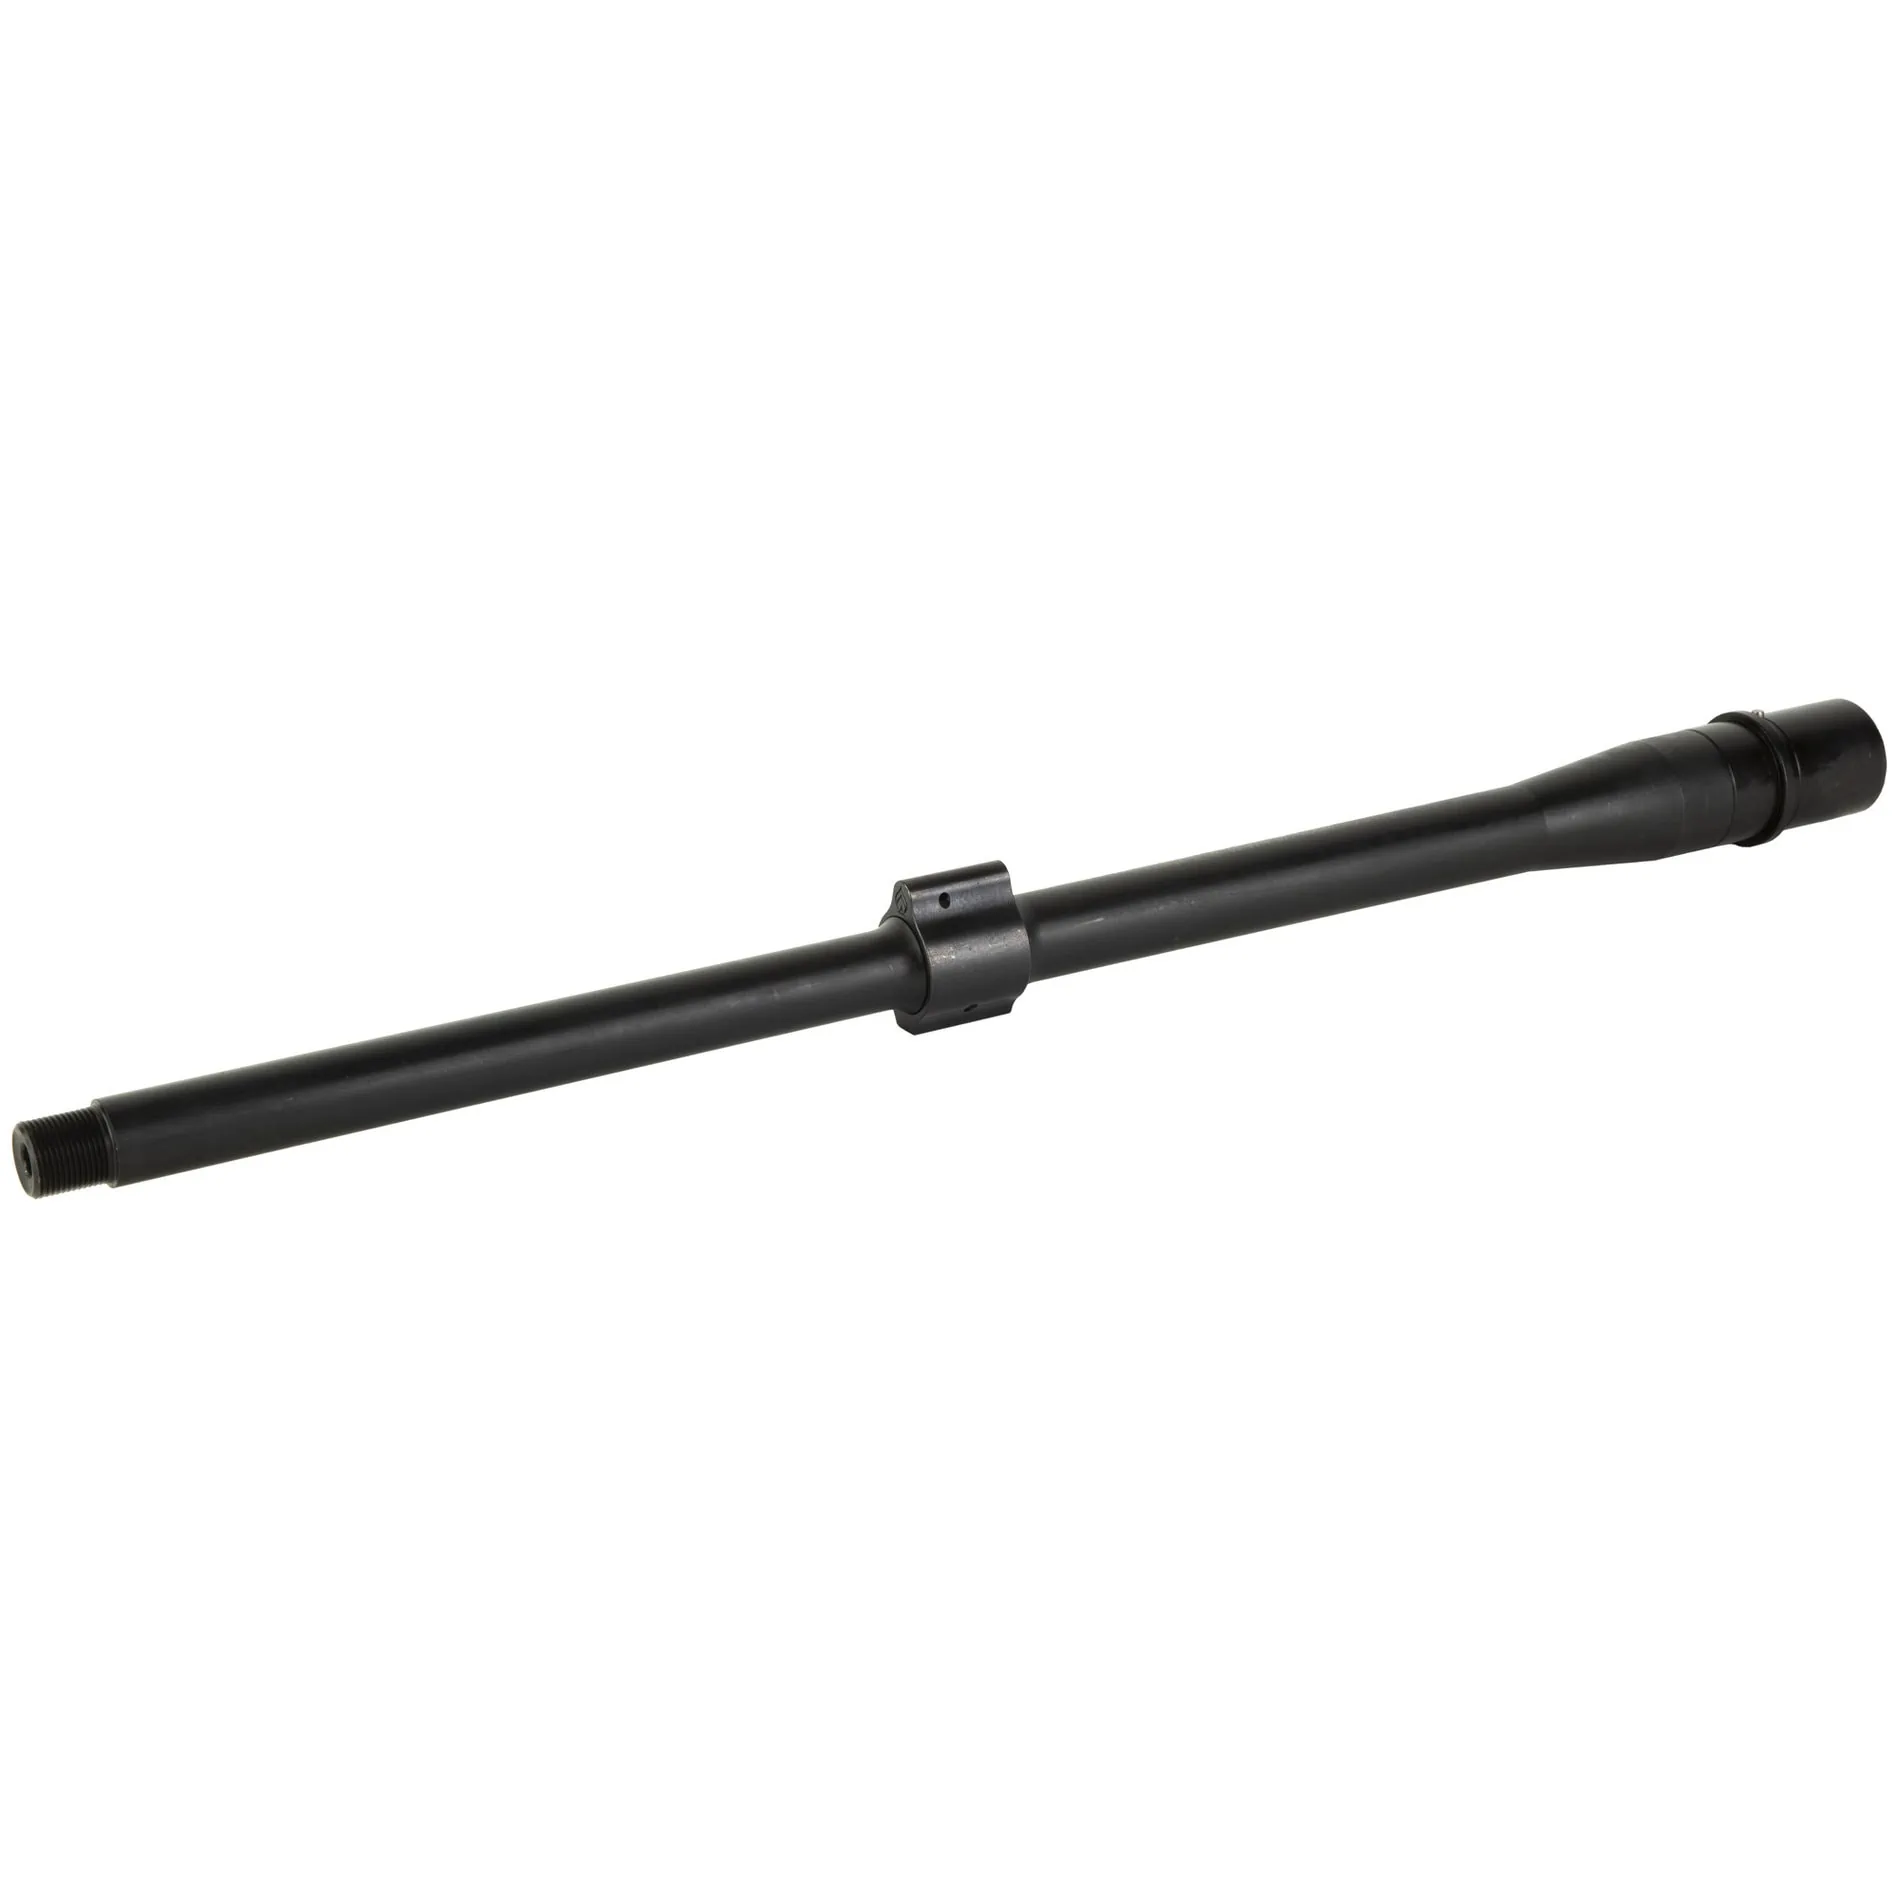 Ballistic Advantage 18" 6.5 Creedmoor Premium Black AR10 Barrel with Midlength Gas Block - Hanson Profile